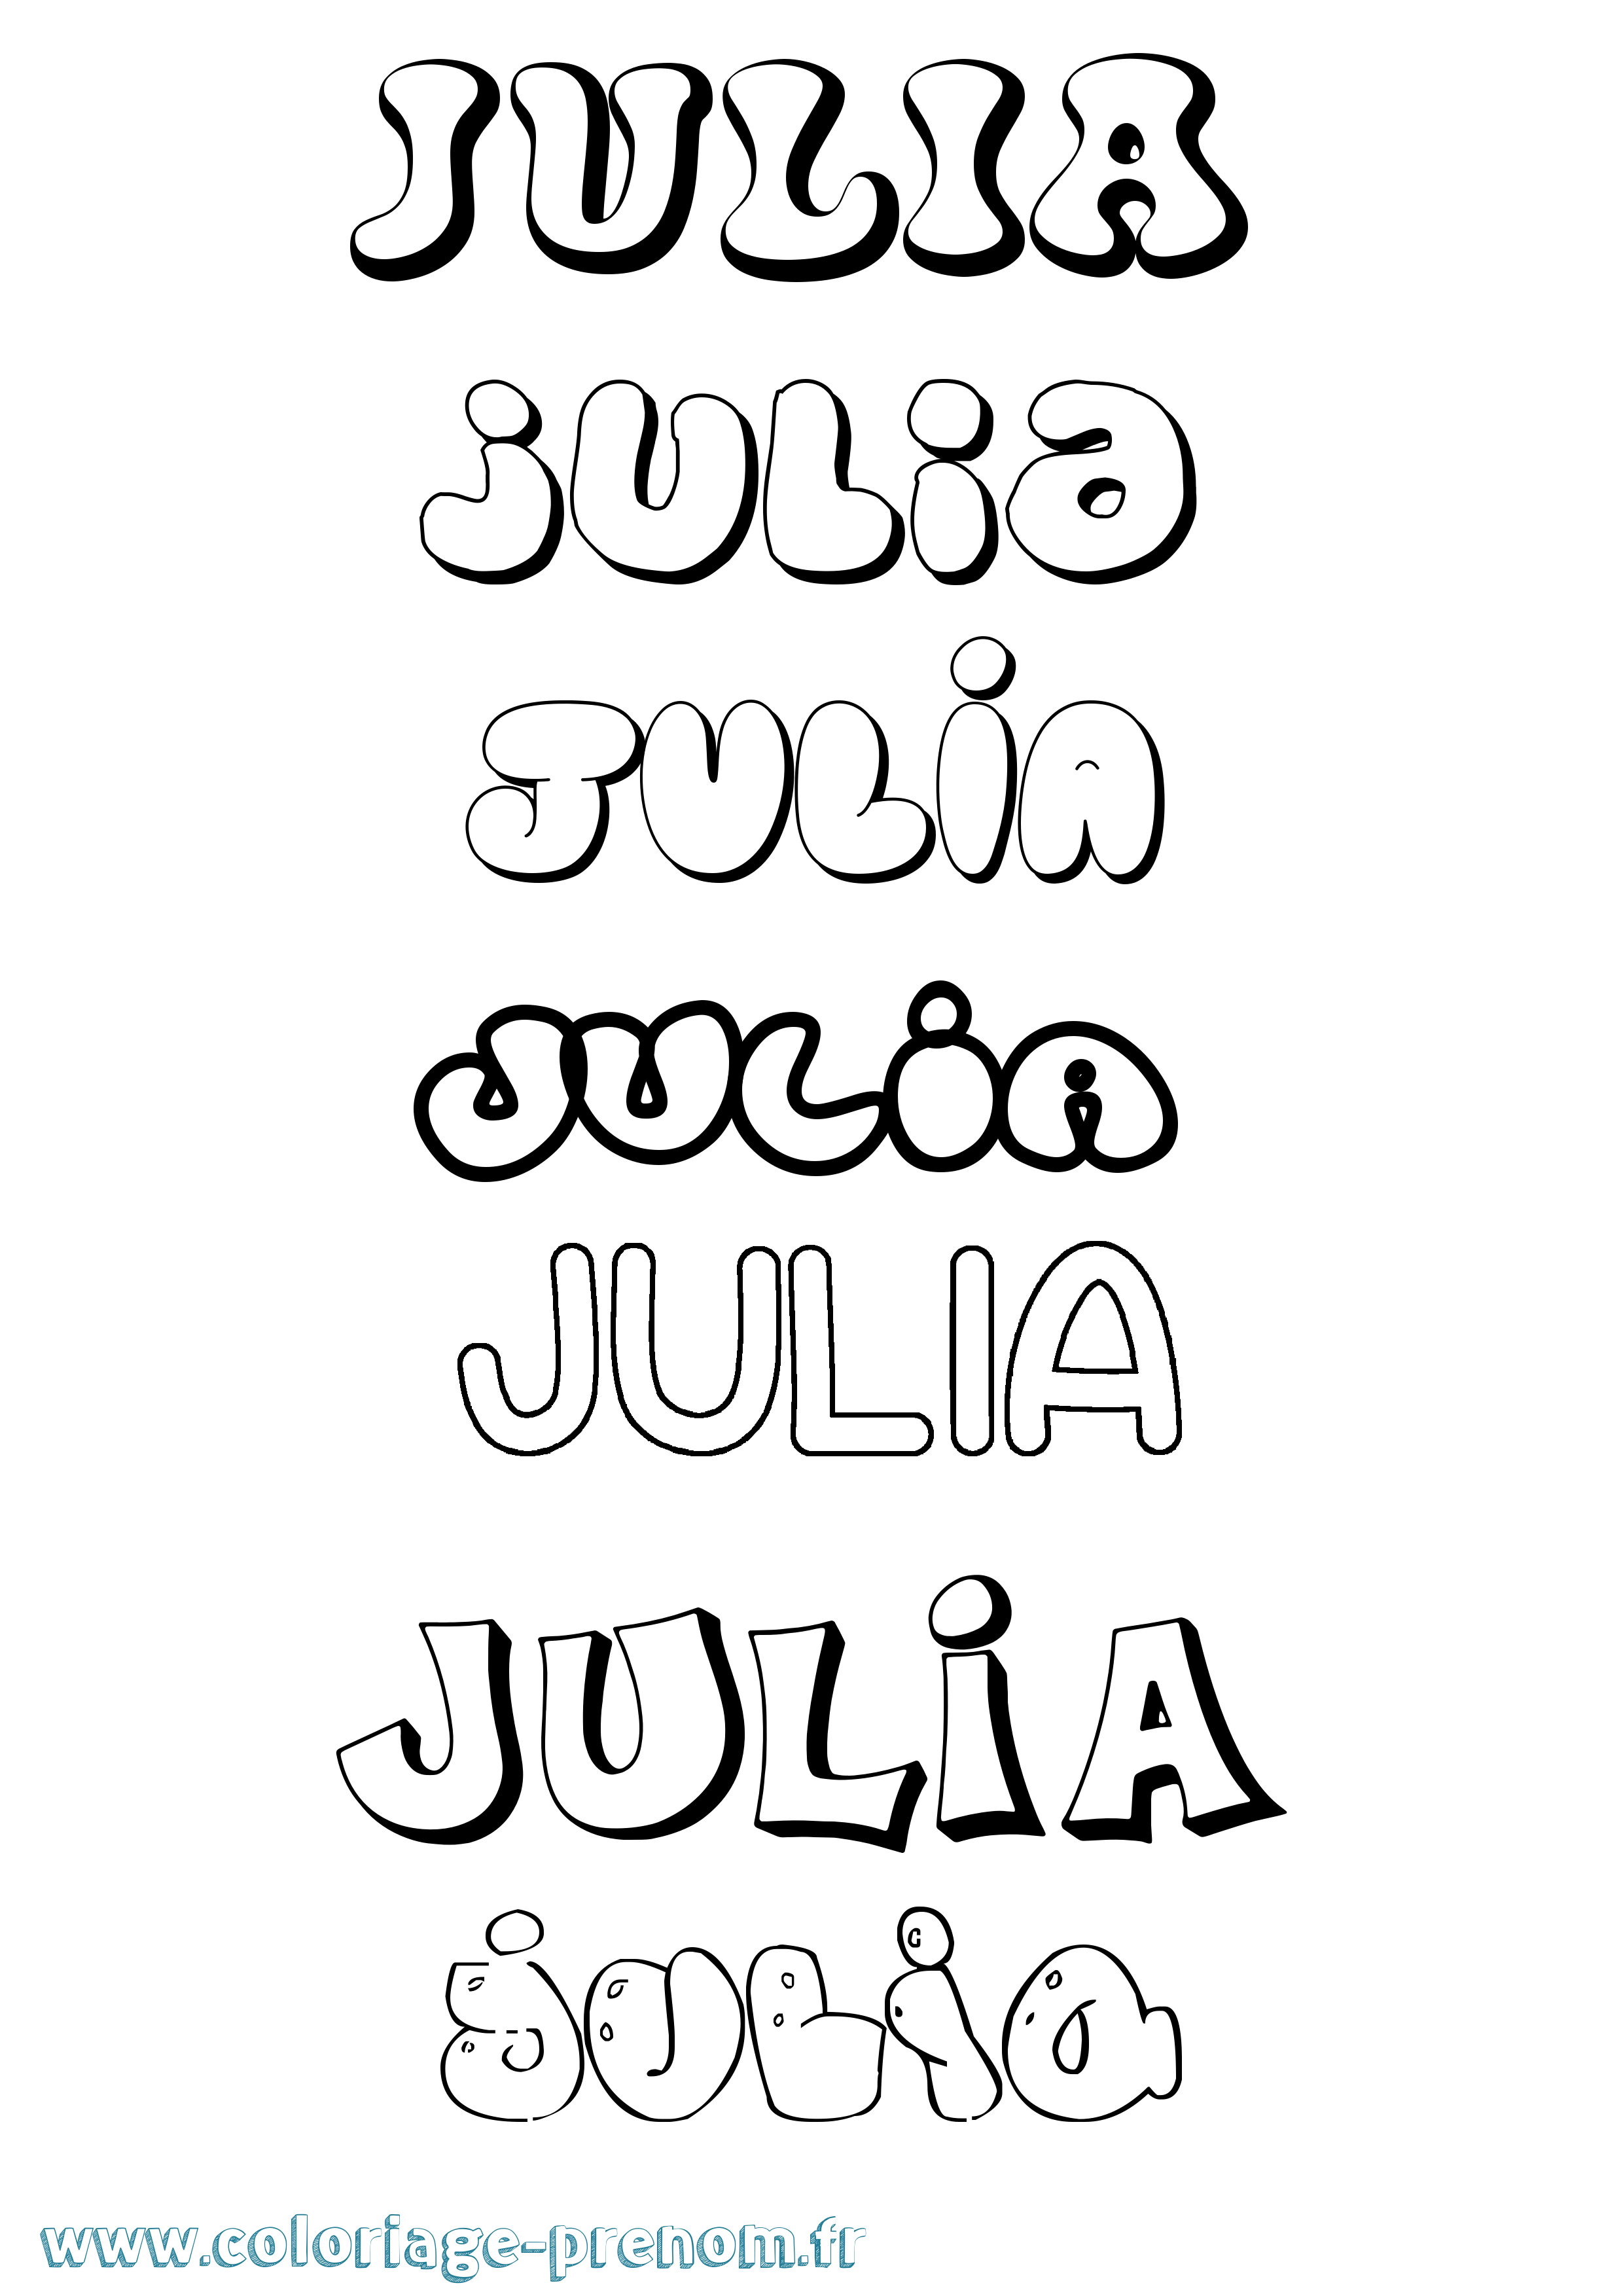 Coloriage prénom Julia Bubble